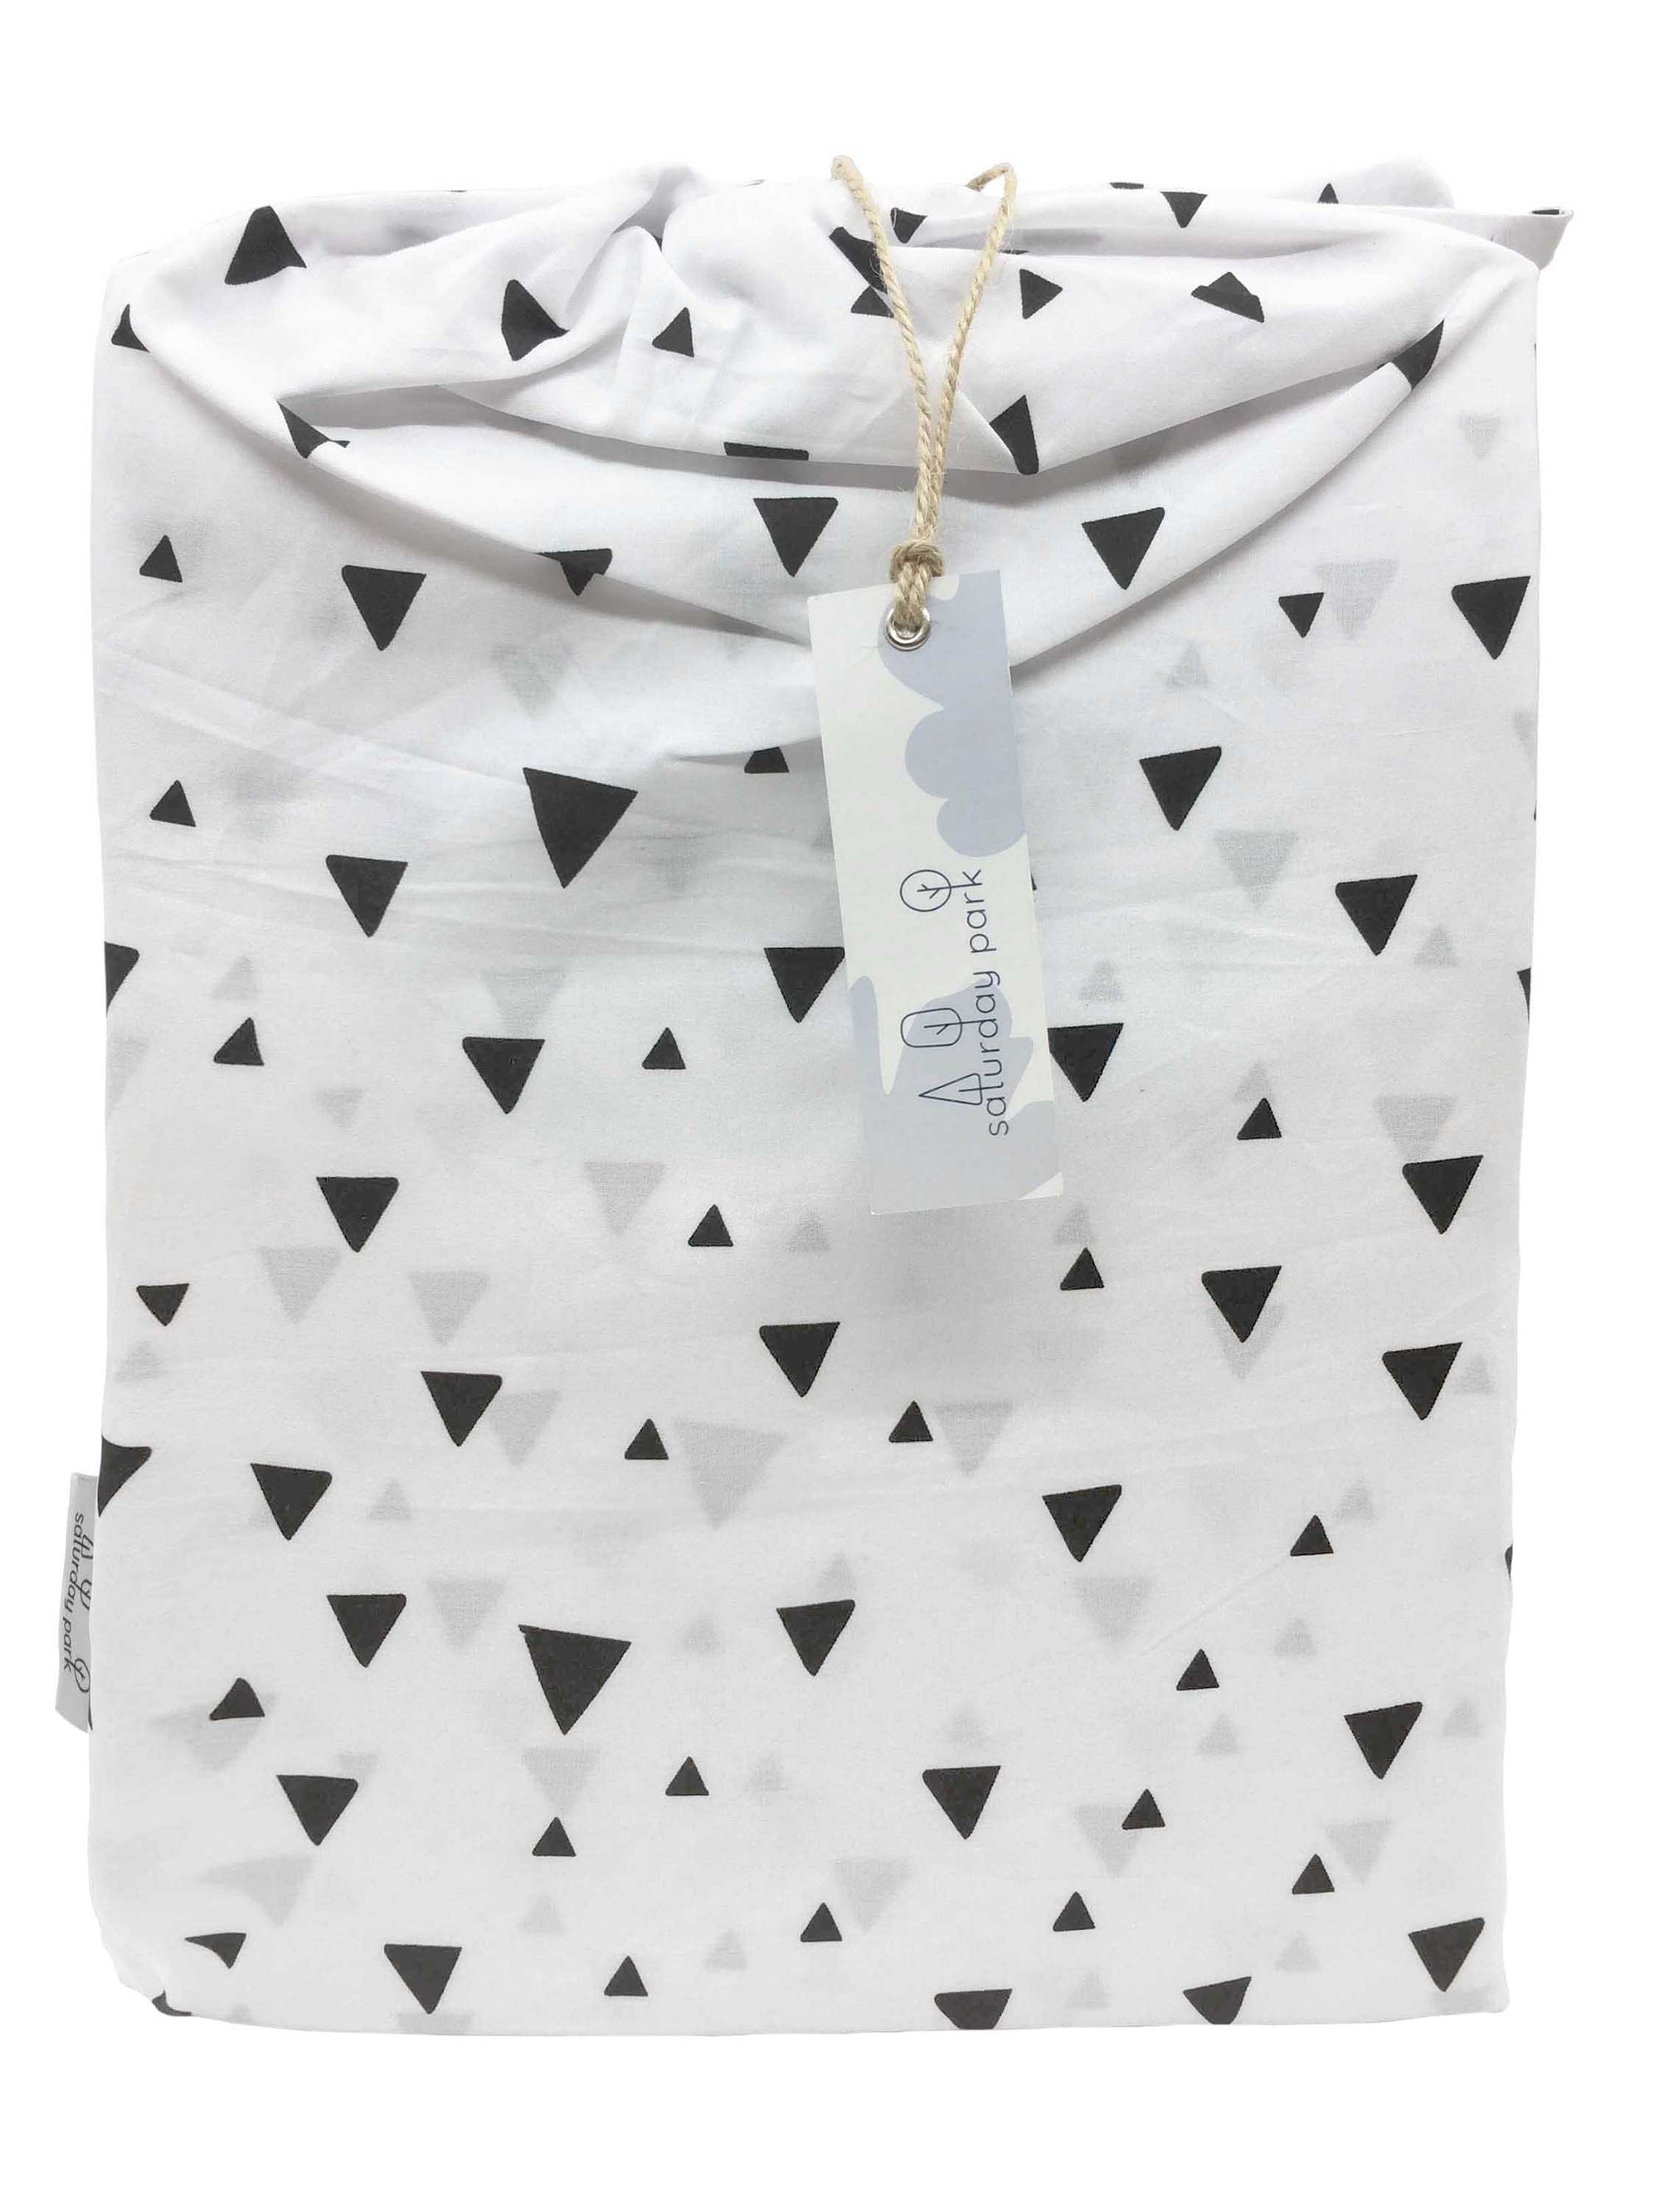 Saturday Park Black Triangles 100% Organic Cotton Sheet Set